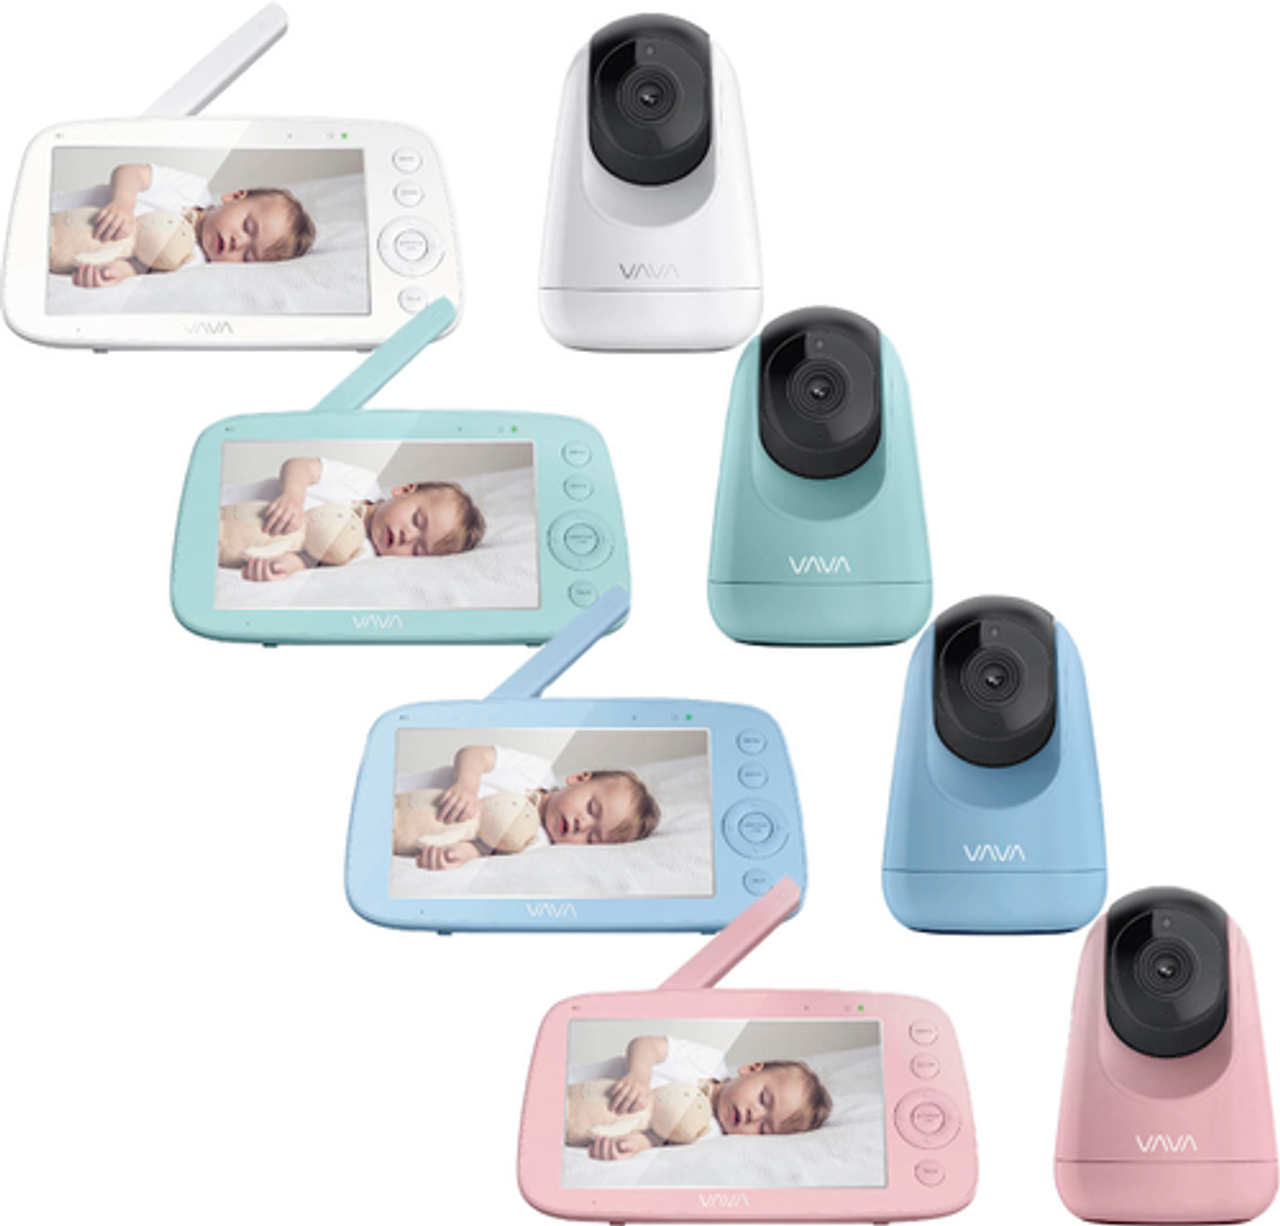 VAVA - Baby Monitor 720P 5" HD Display - Blue